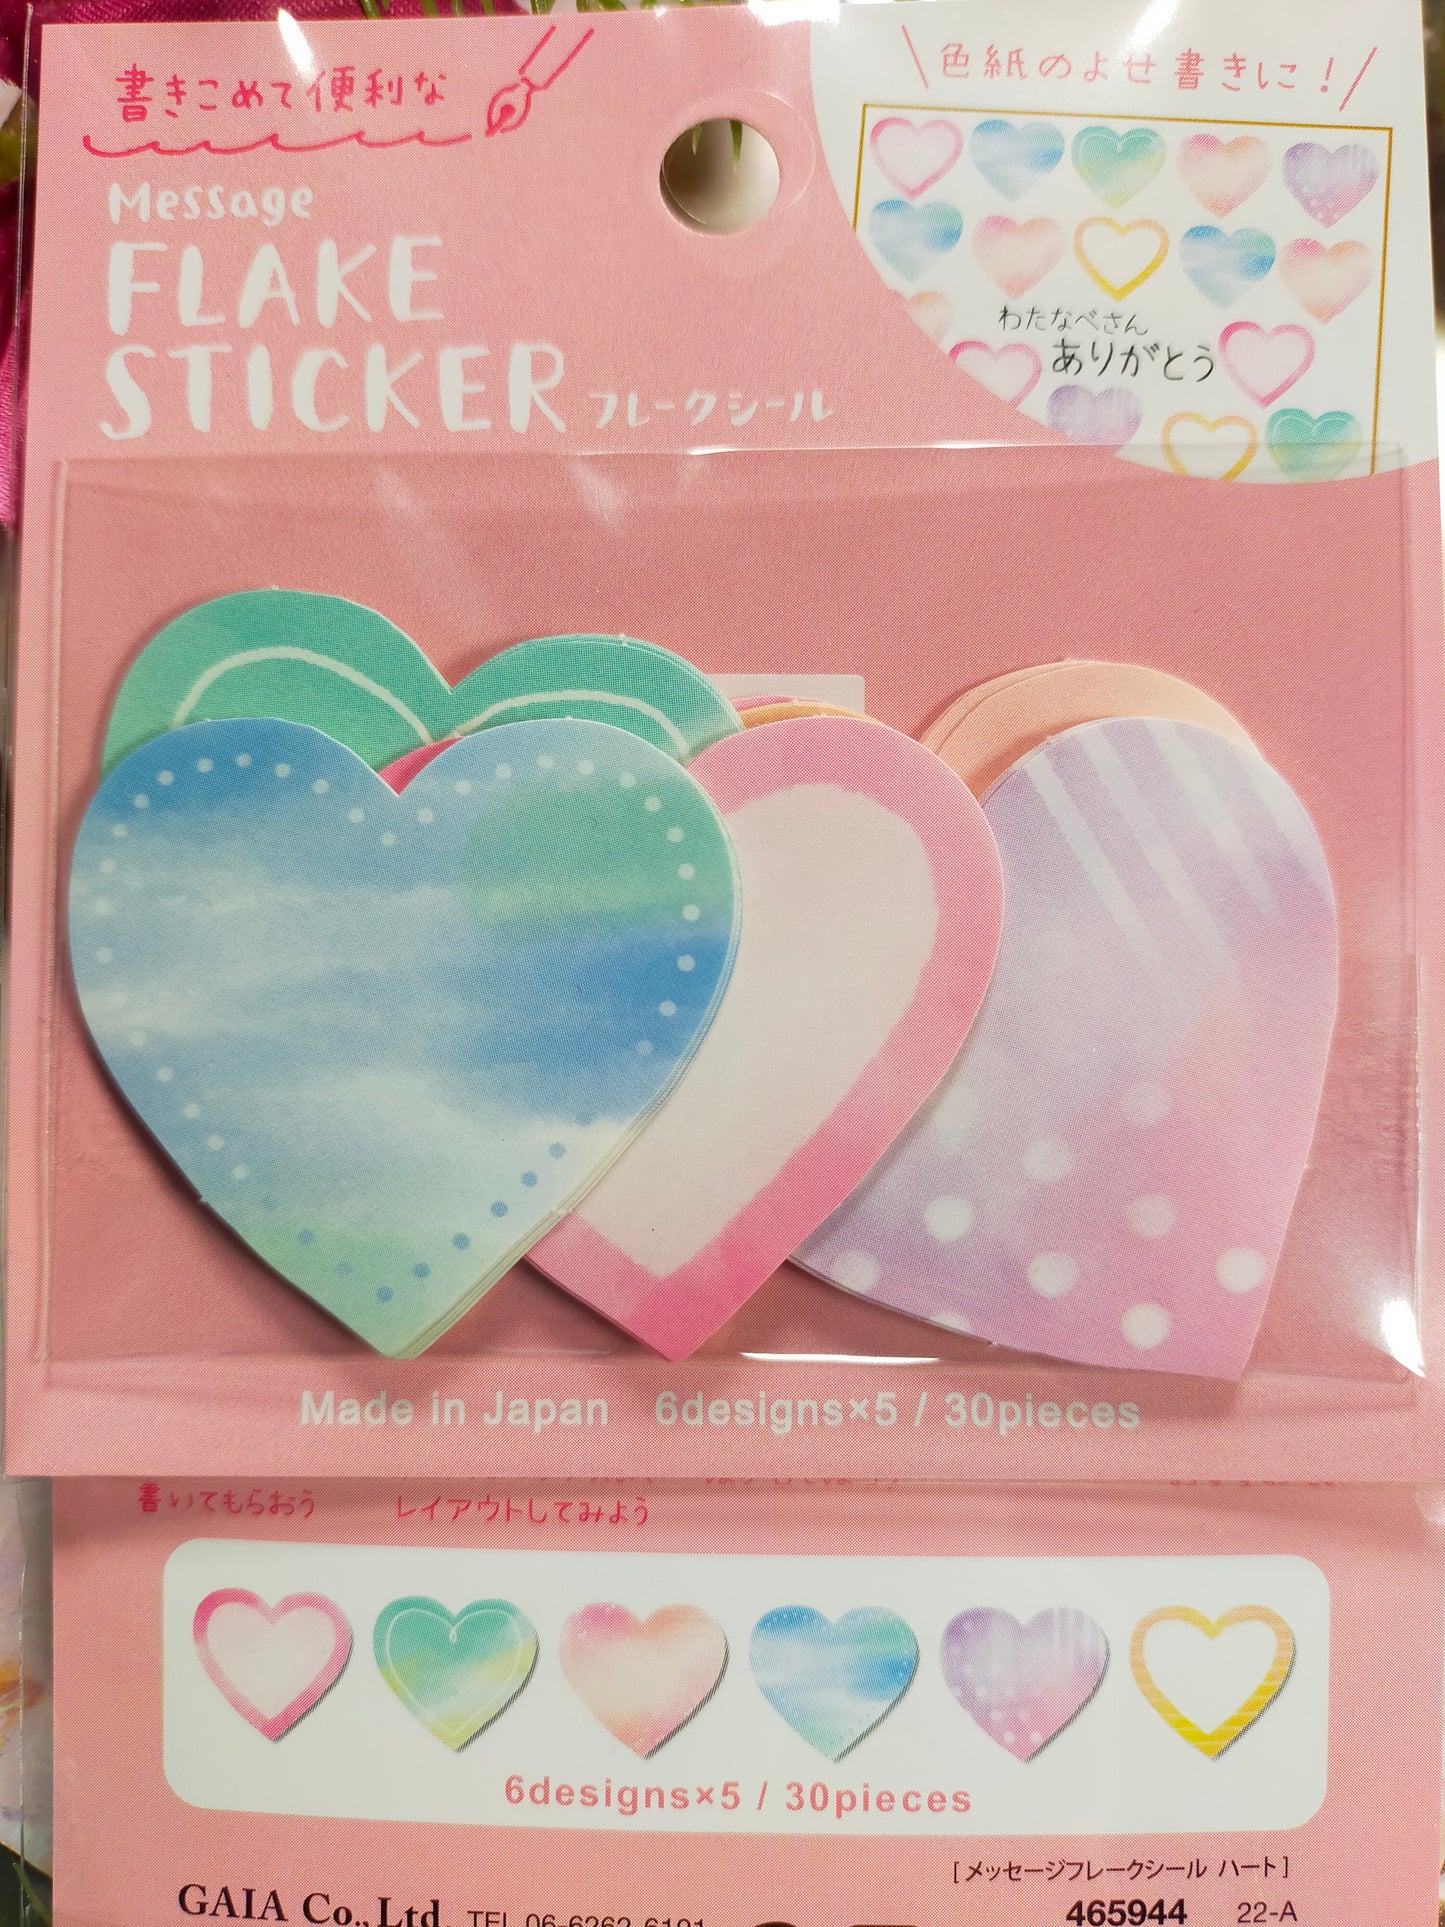 Flake Sticker Message Sticker 6designs*5pieces,GAIA _ Heart / Circle / Square / Flower